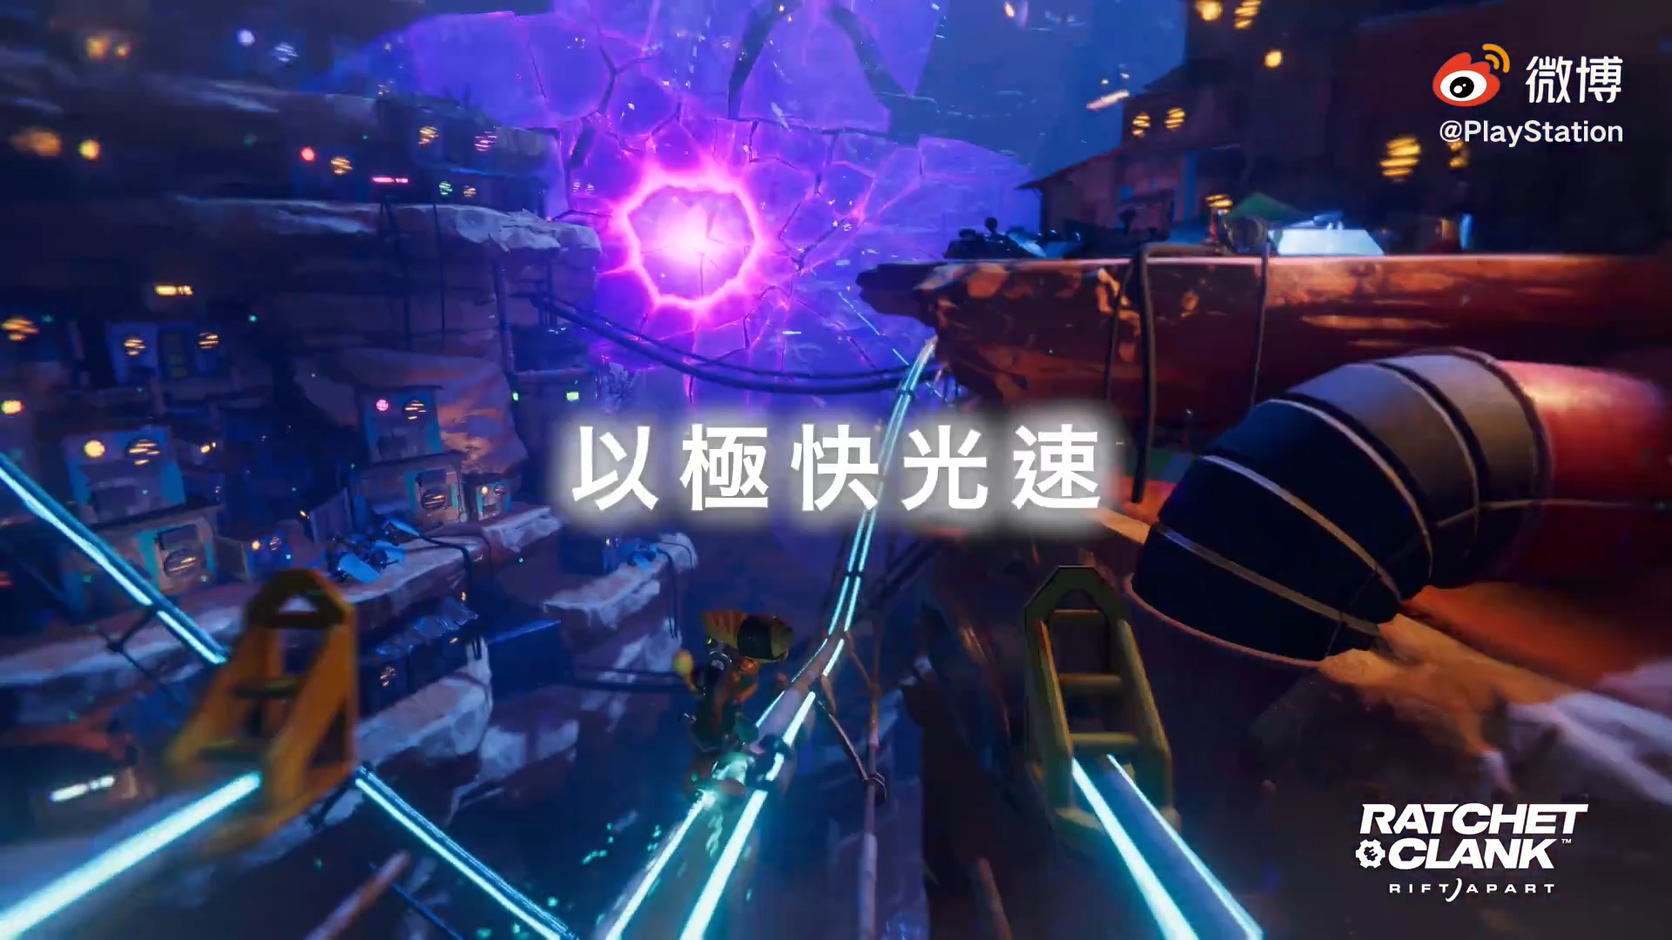 PS5全新中文宣传片公布 创新游戏境界